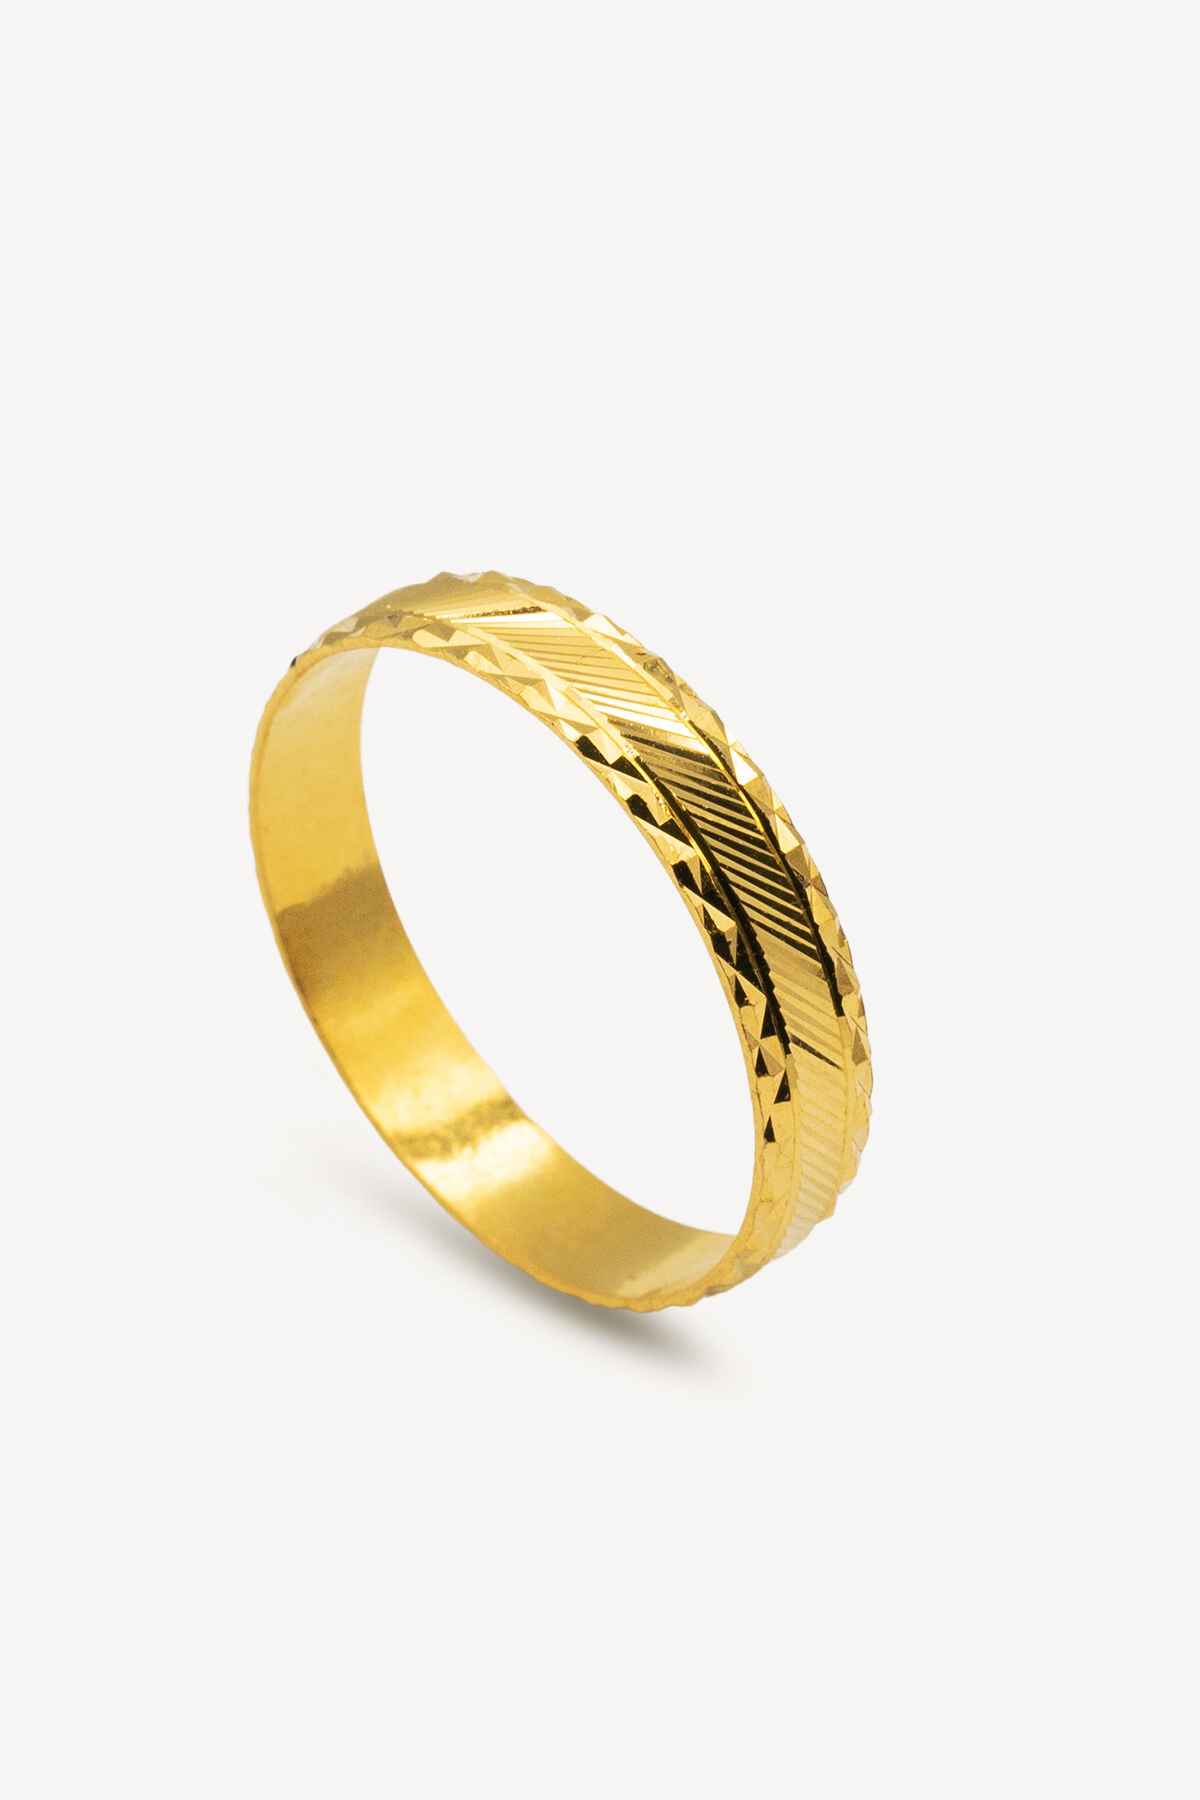 916 Gold minimalist ring band 